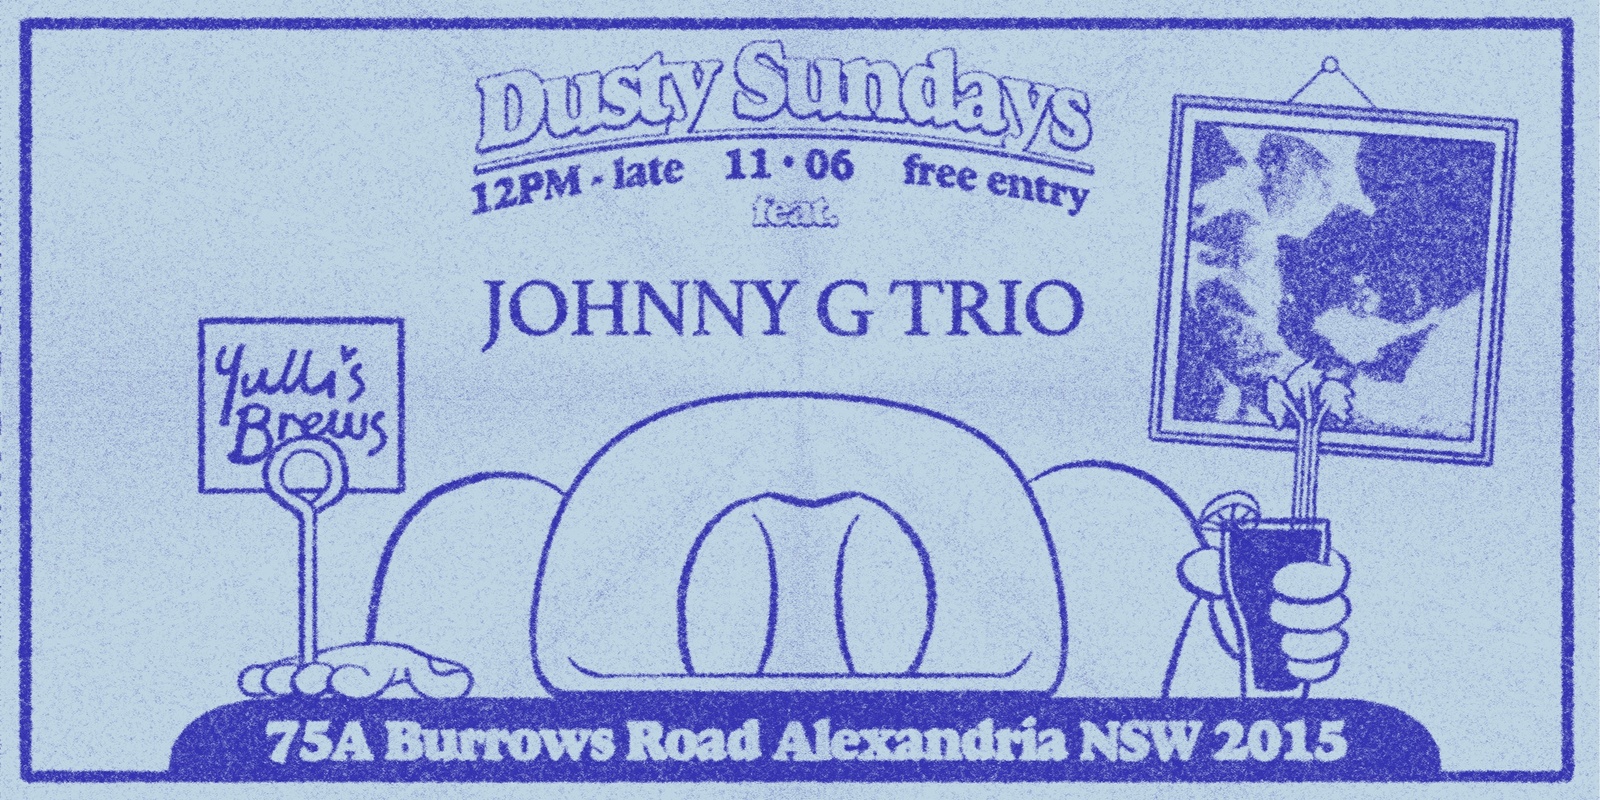 DUSTY SUNDAYS - JOHNNY G TRIO